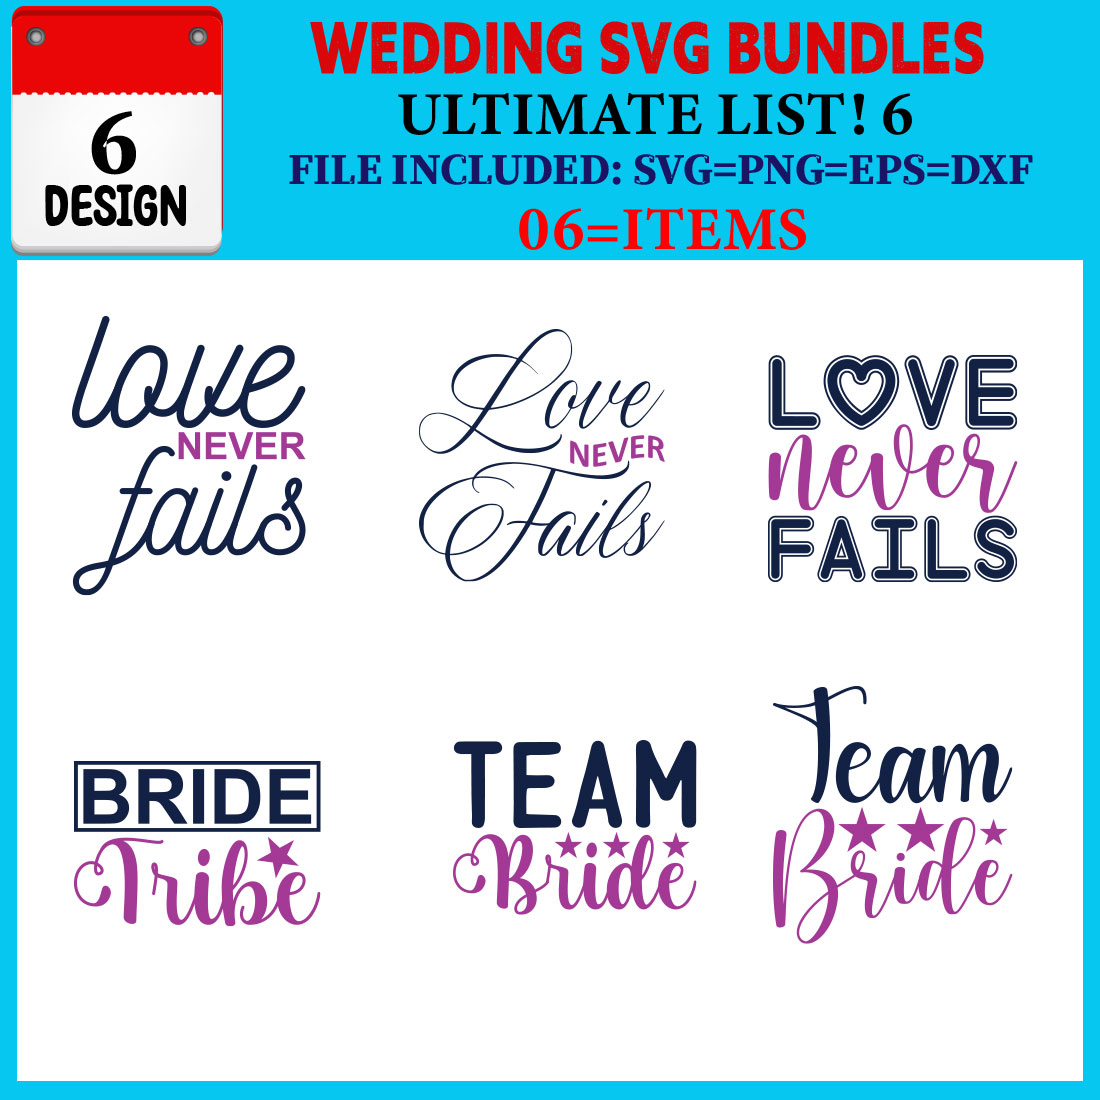 Wedding T-shirt Design Bundle Vol-03 cover image.